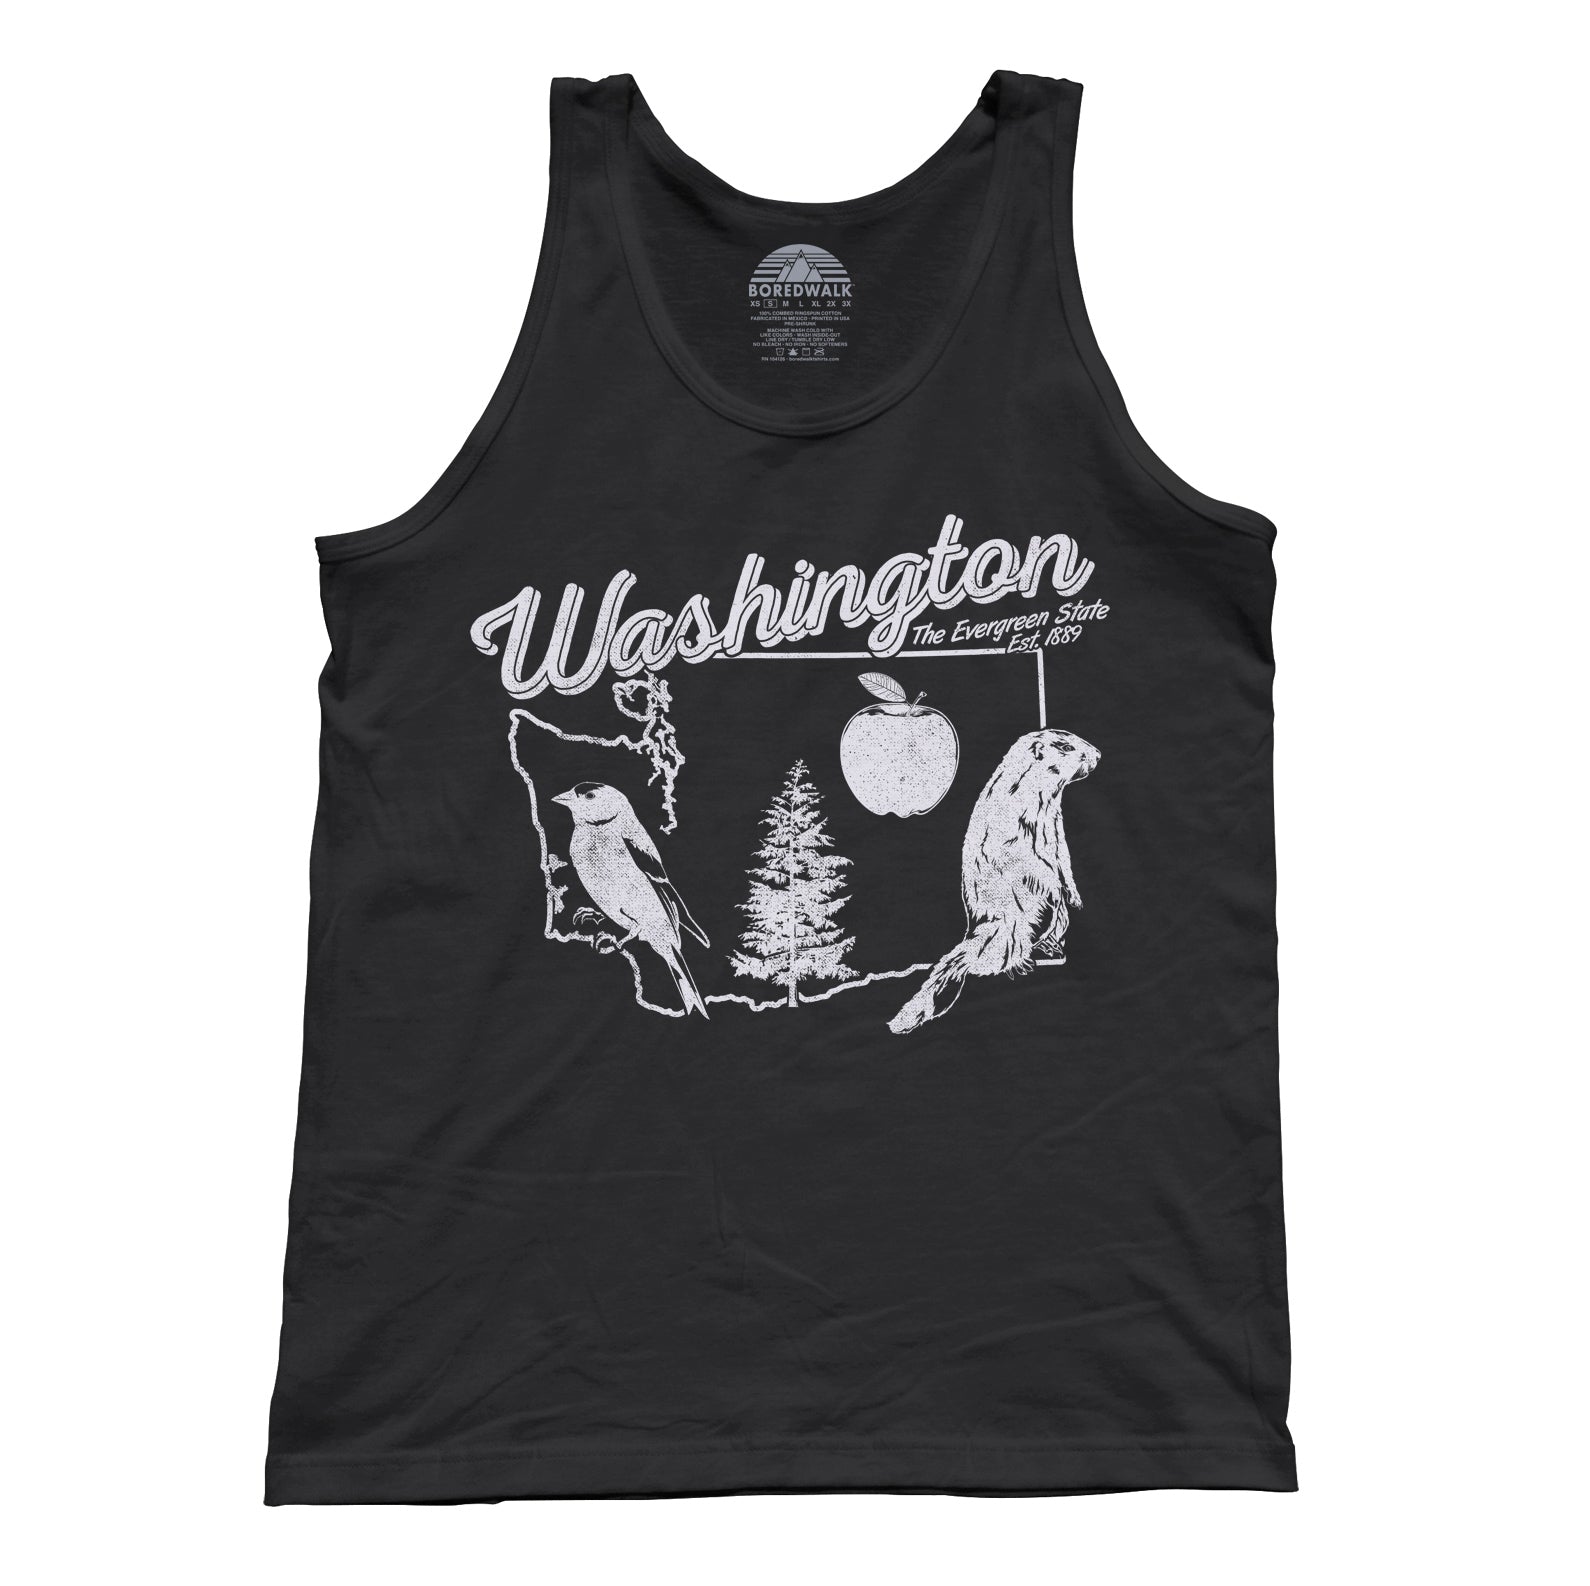 Unisex Vintage Washington Tank Top